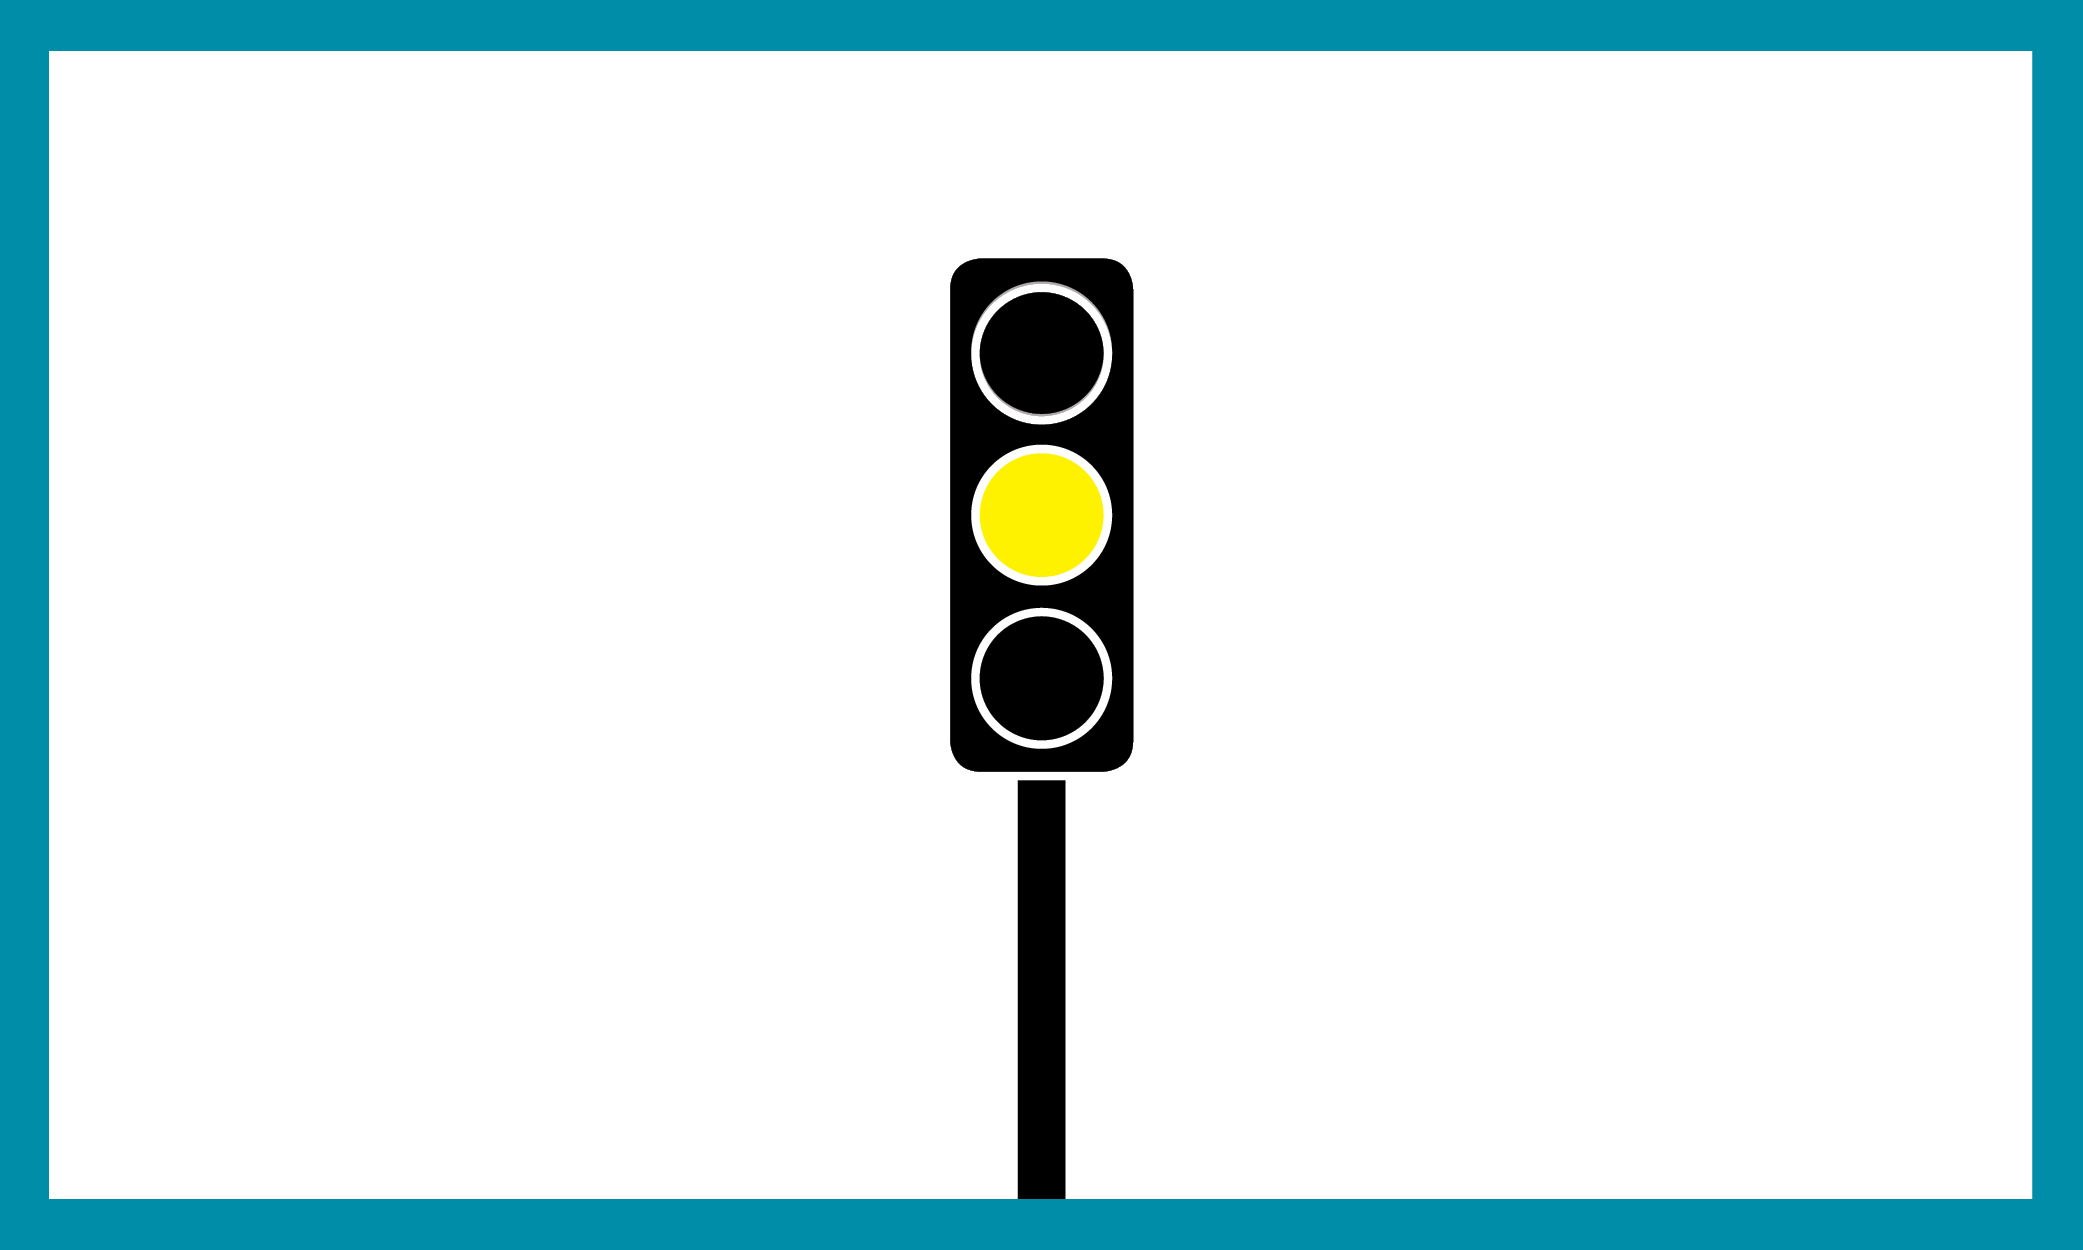 Step 9 – Scanning the Horizon (yellow traffic light)